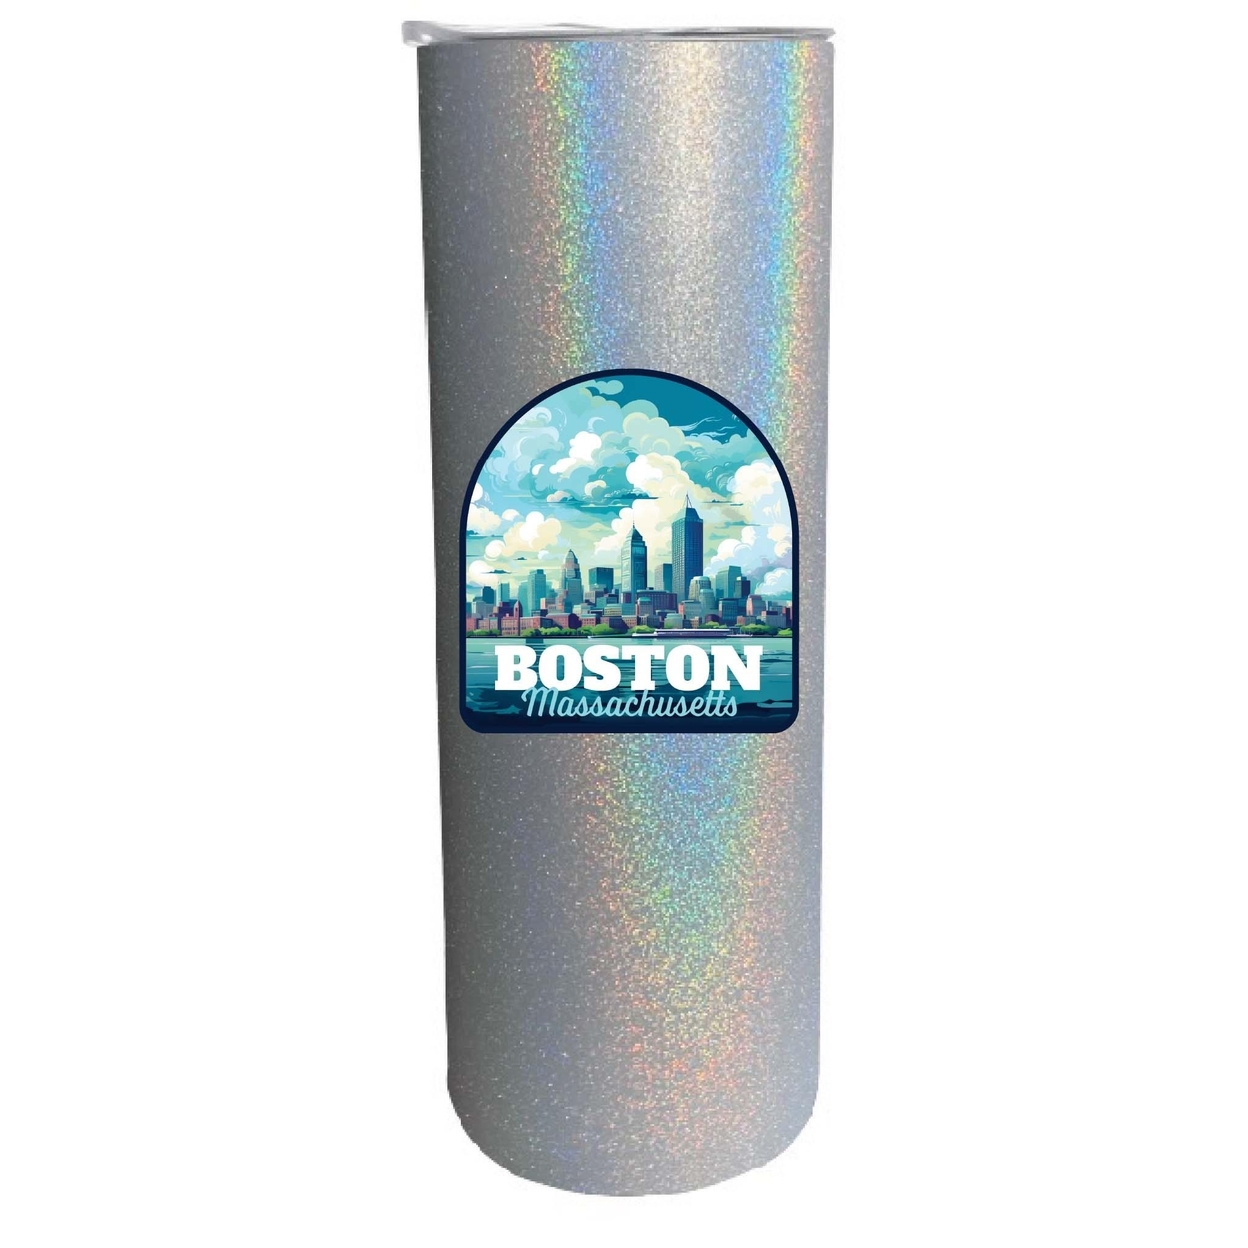 Boston Massachusetts A Souvenir 20 Oz Insulated Skinny Tumbler Glitter - Gray Glitter,,2-Pack